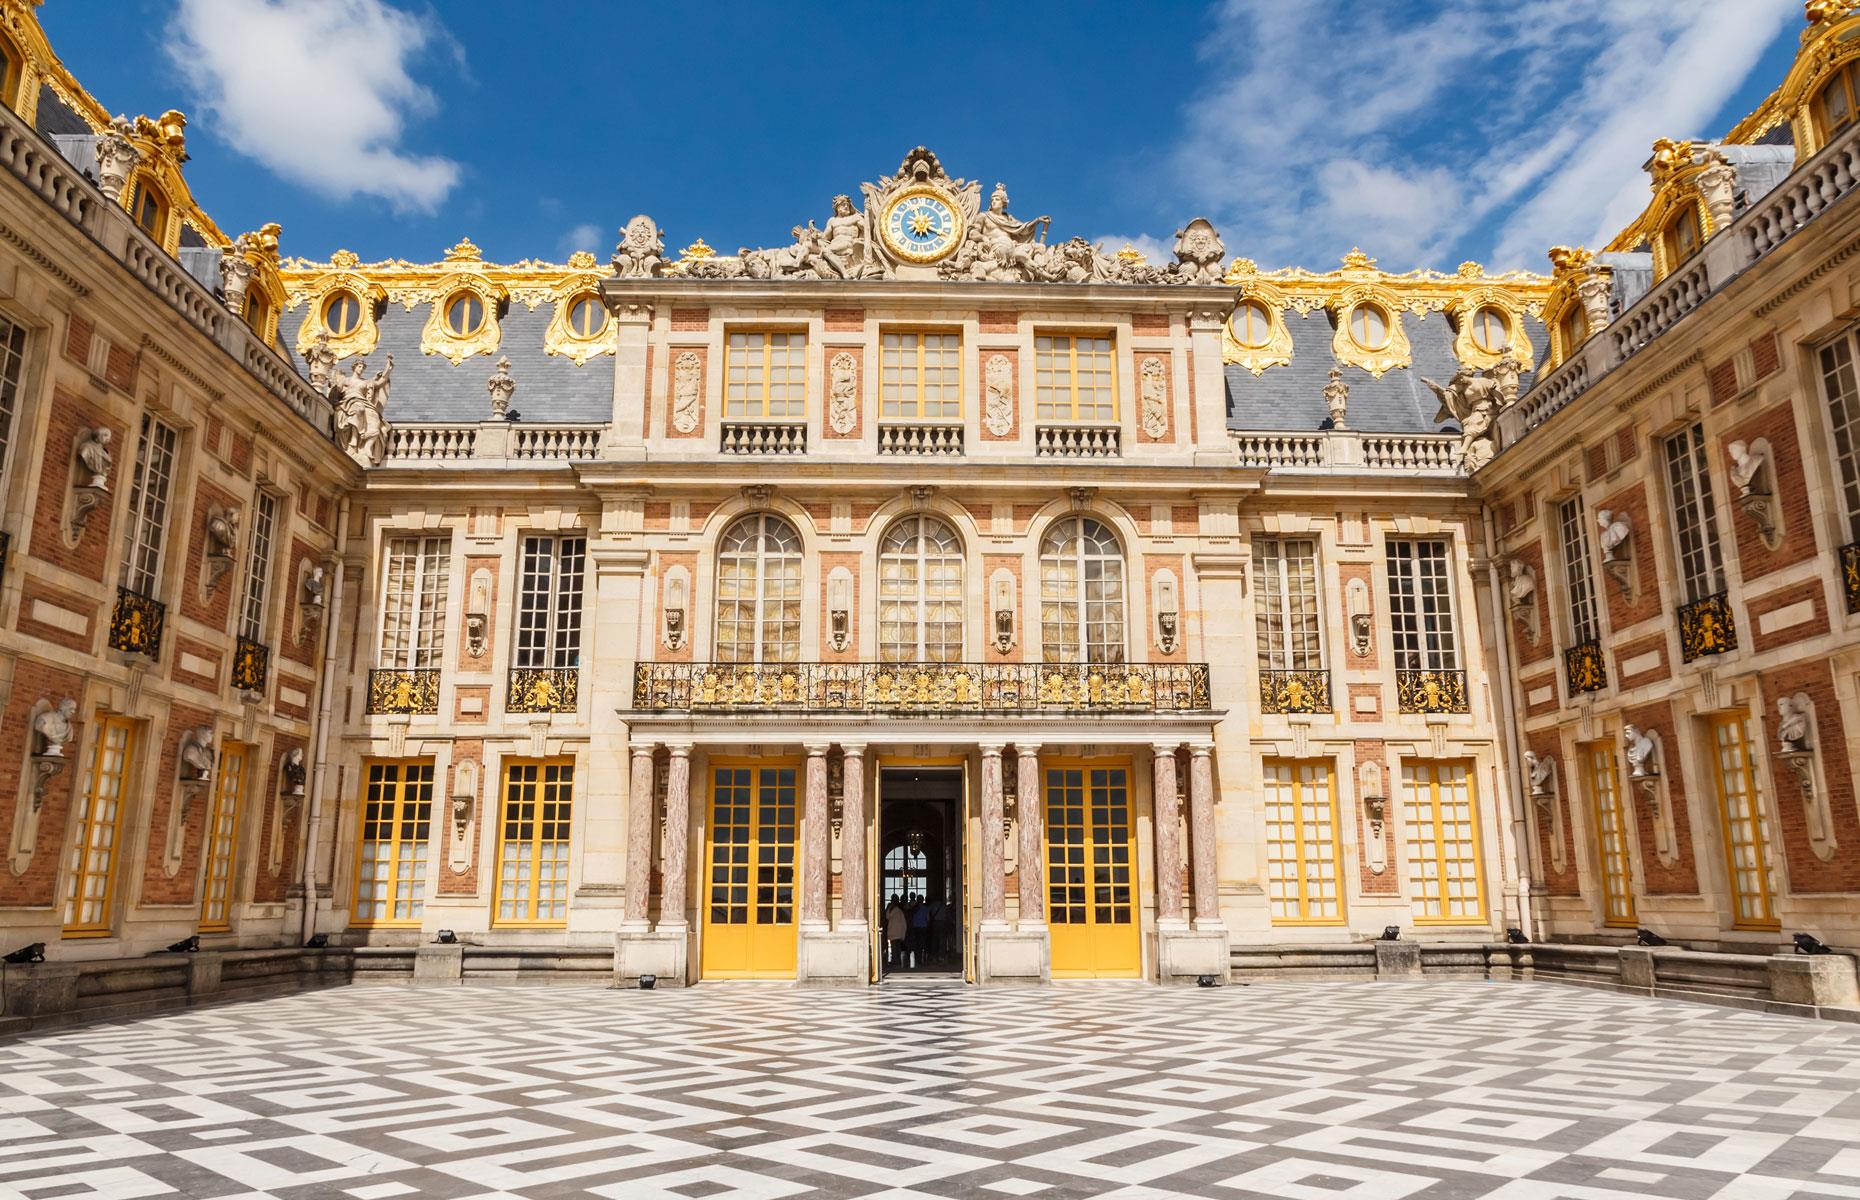 Palace of Versailles, France – $50.7 billion (£38.8bn)